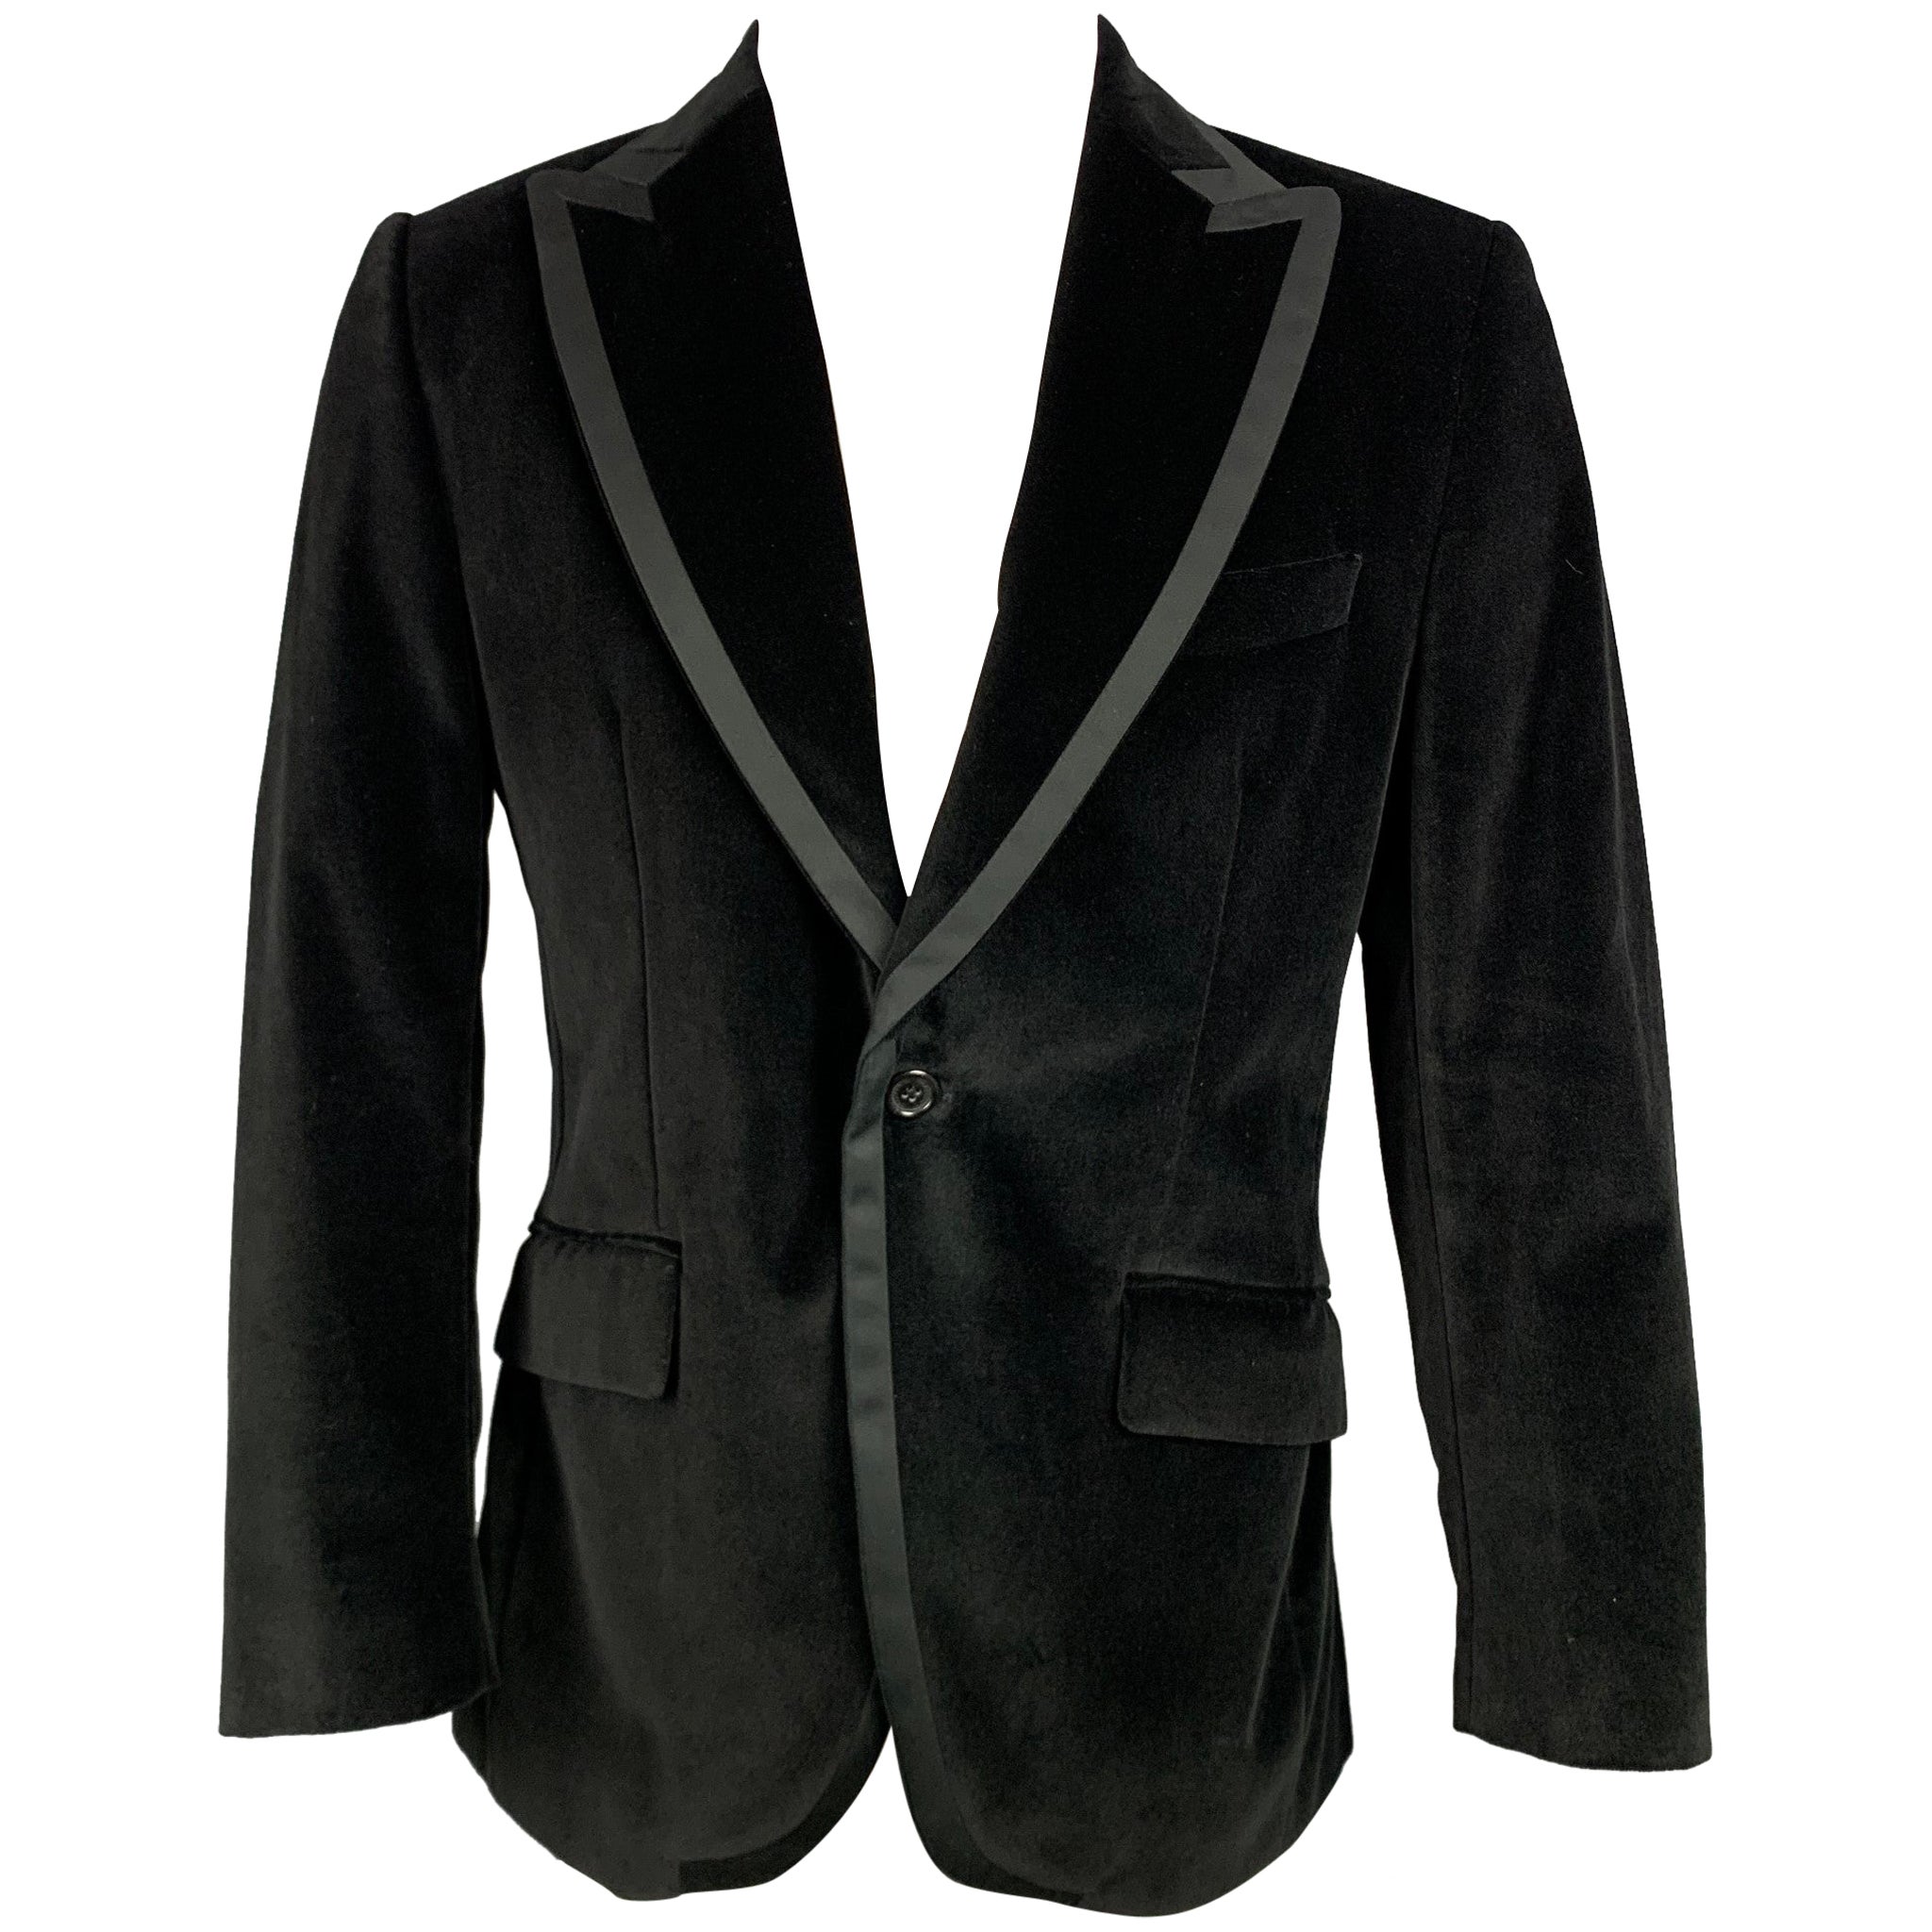 GAZZARRINI Size 42 Black Velvet Cotton Peak Lapel Sport Coat